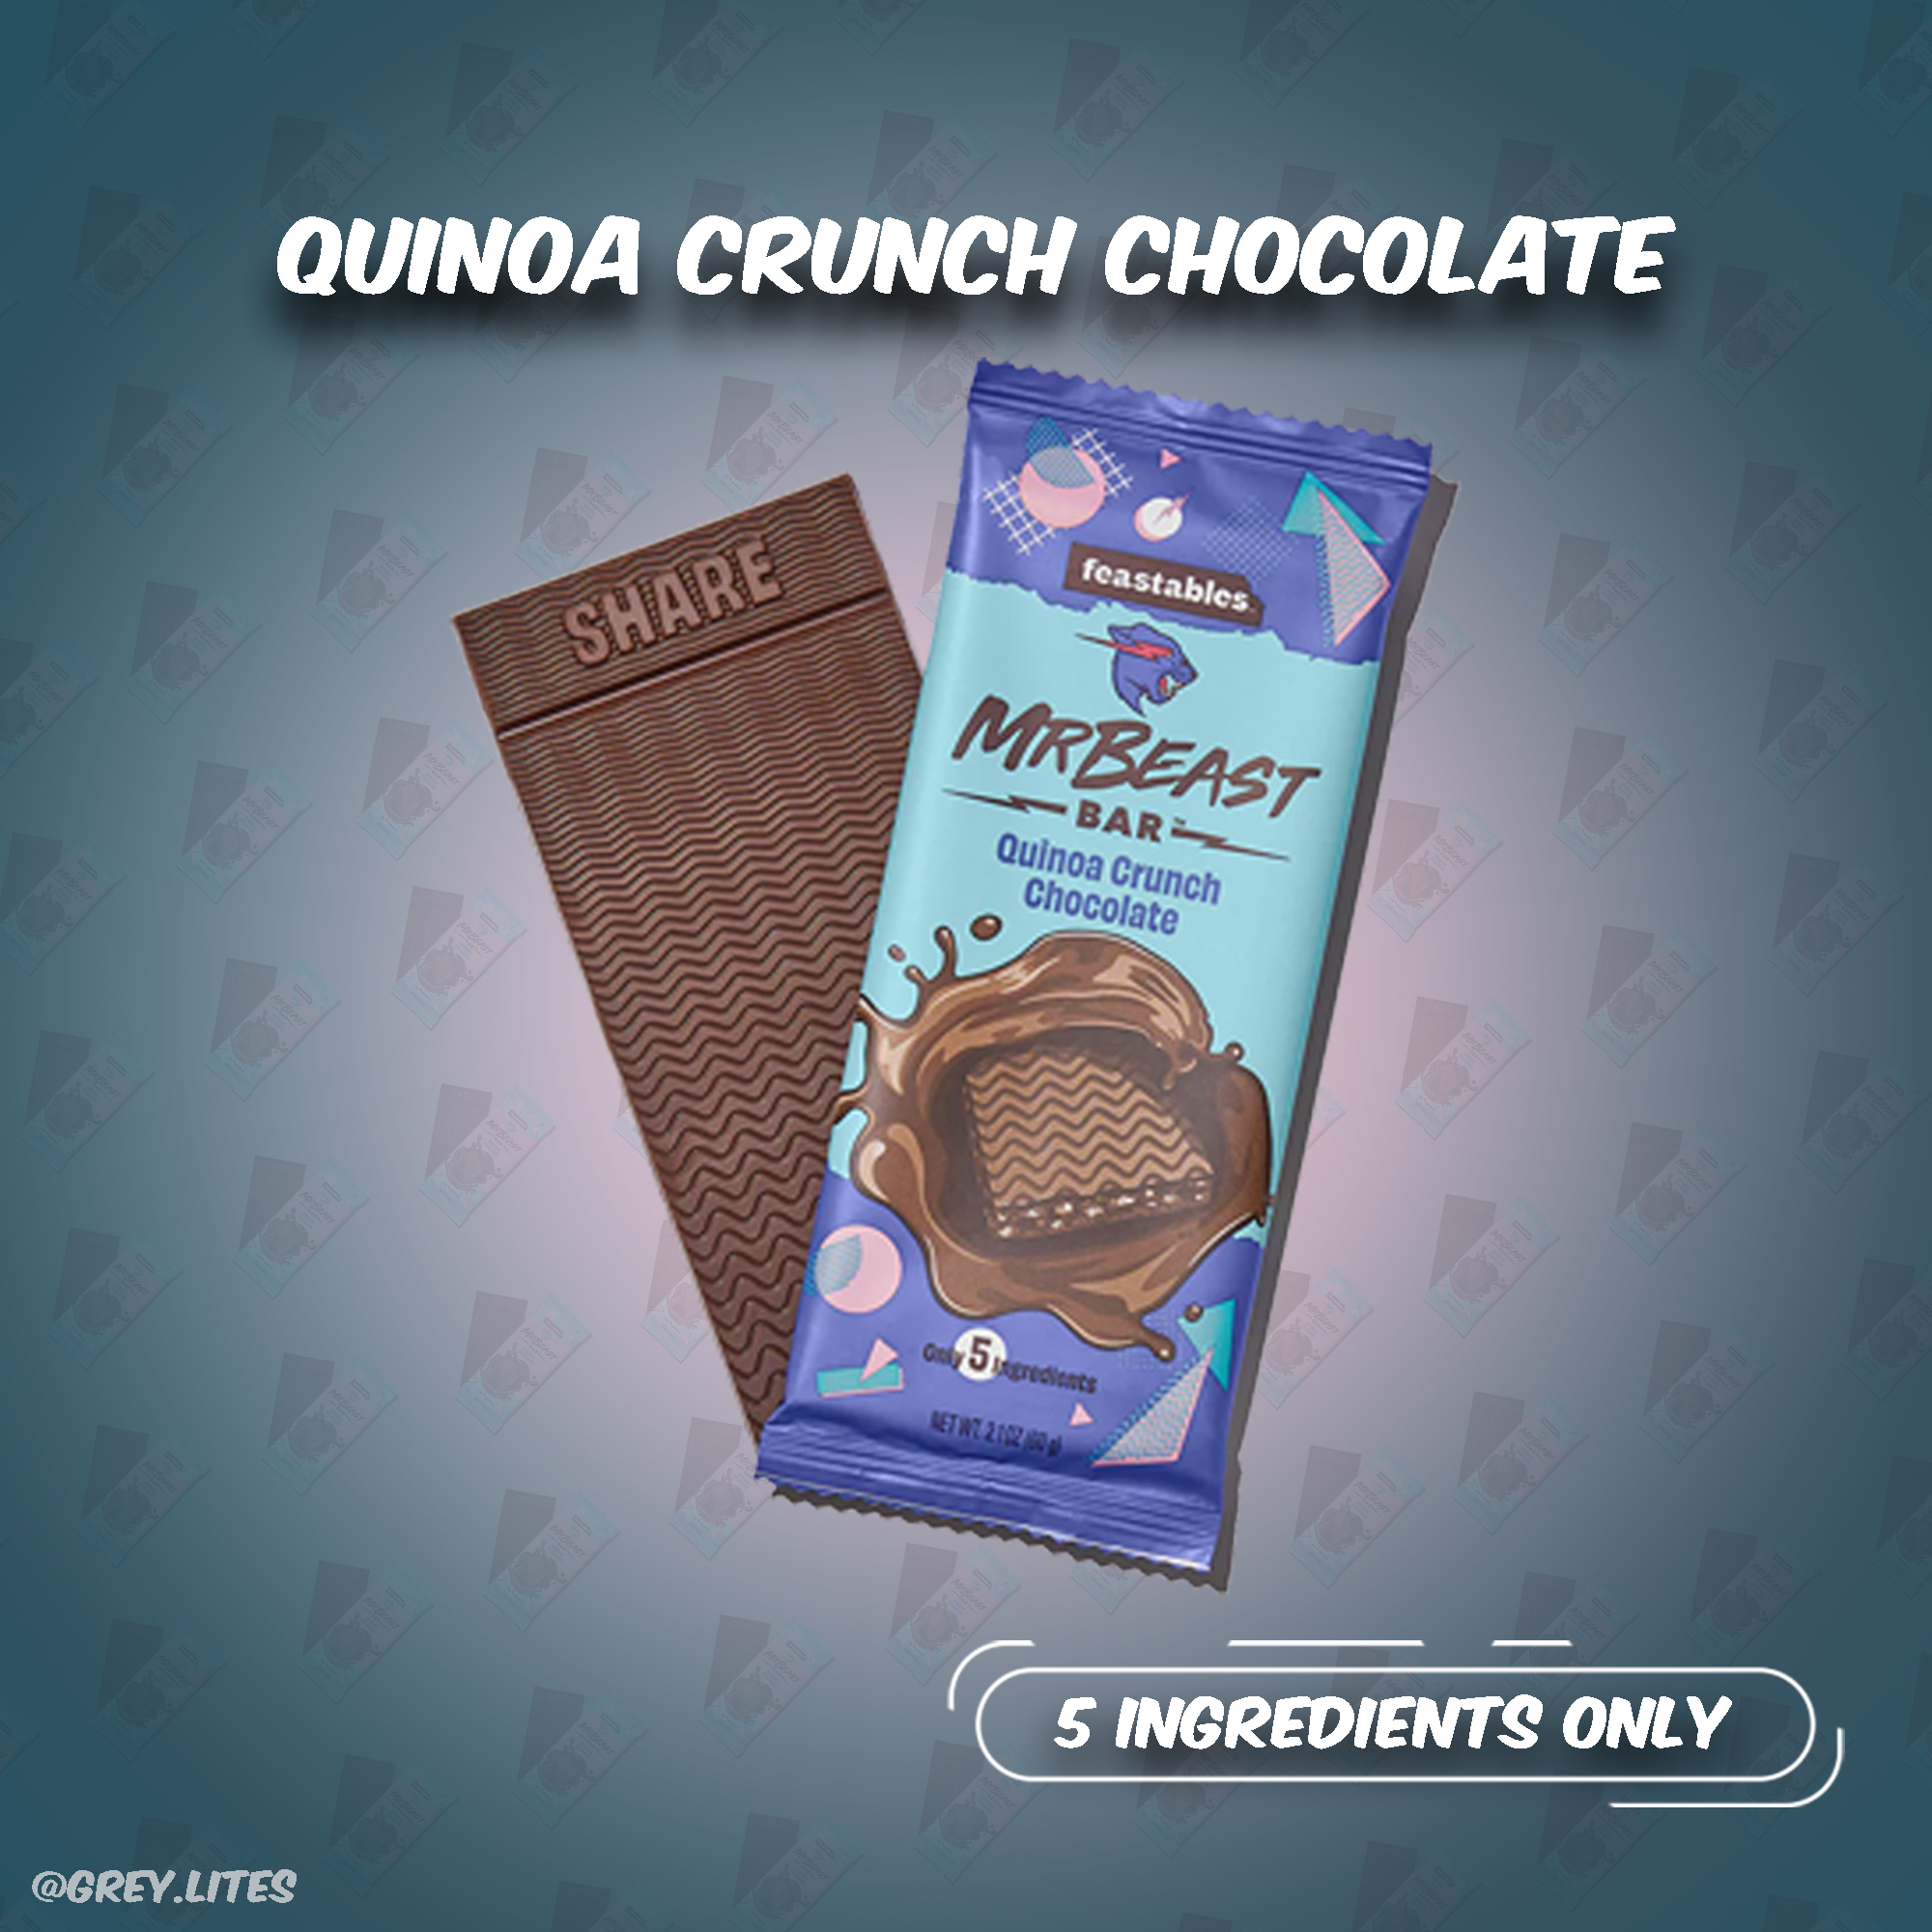 Mr Beast Quinoa Crunch Chocolate Bar